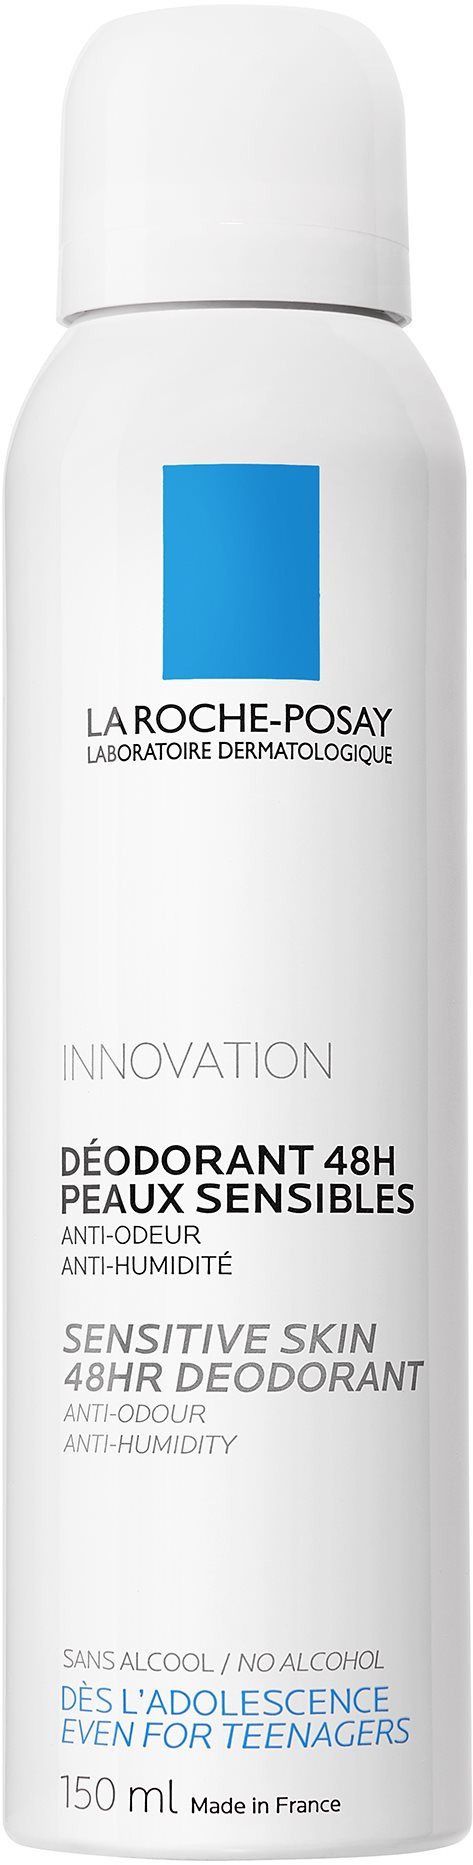 LA ROCHE-POSAY Deodorant Physiologique Aerosol 48H 150 ml